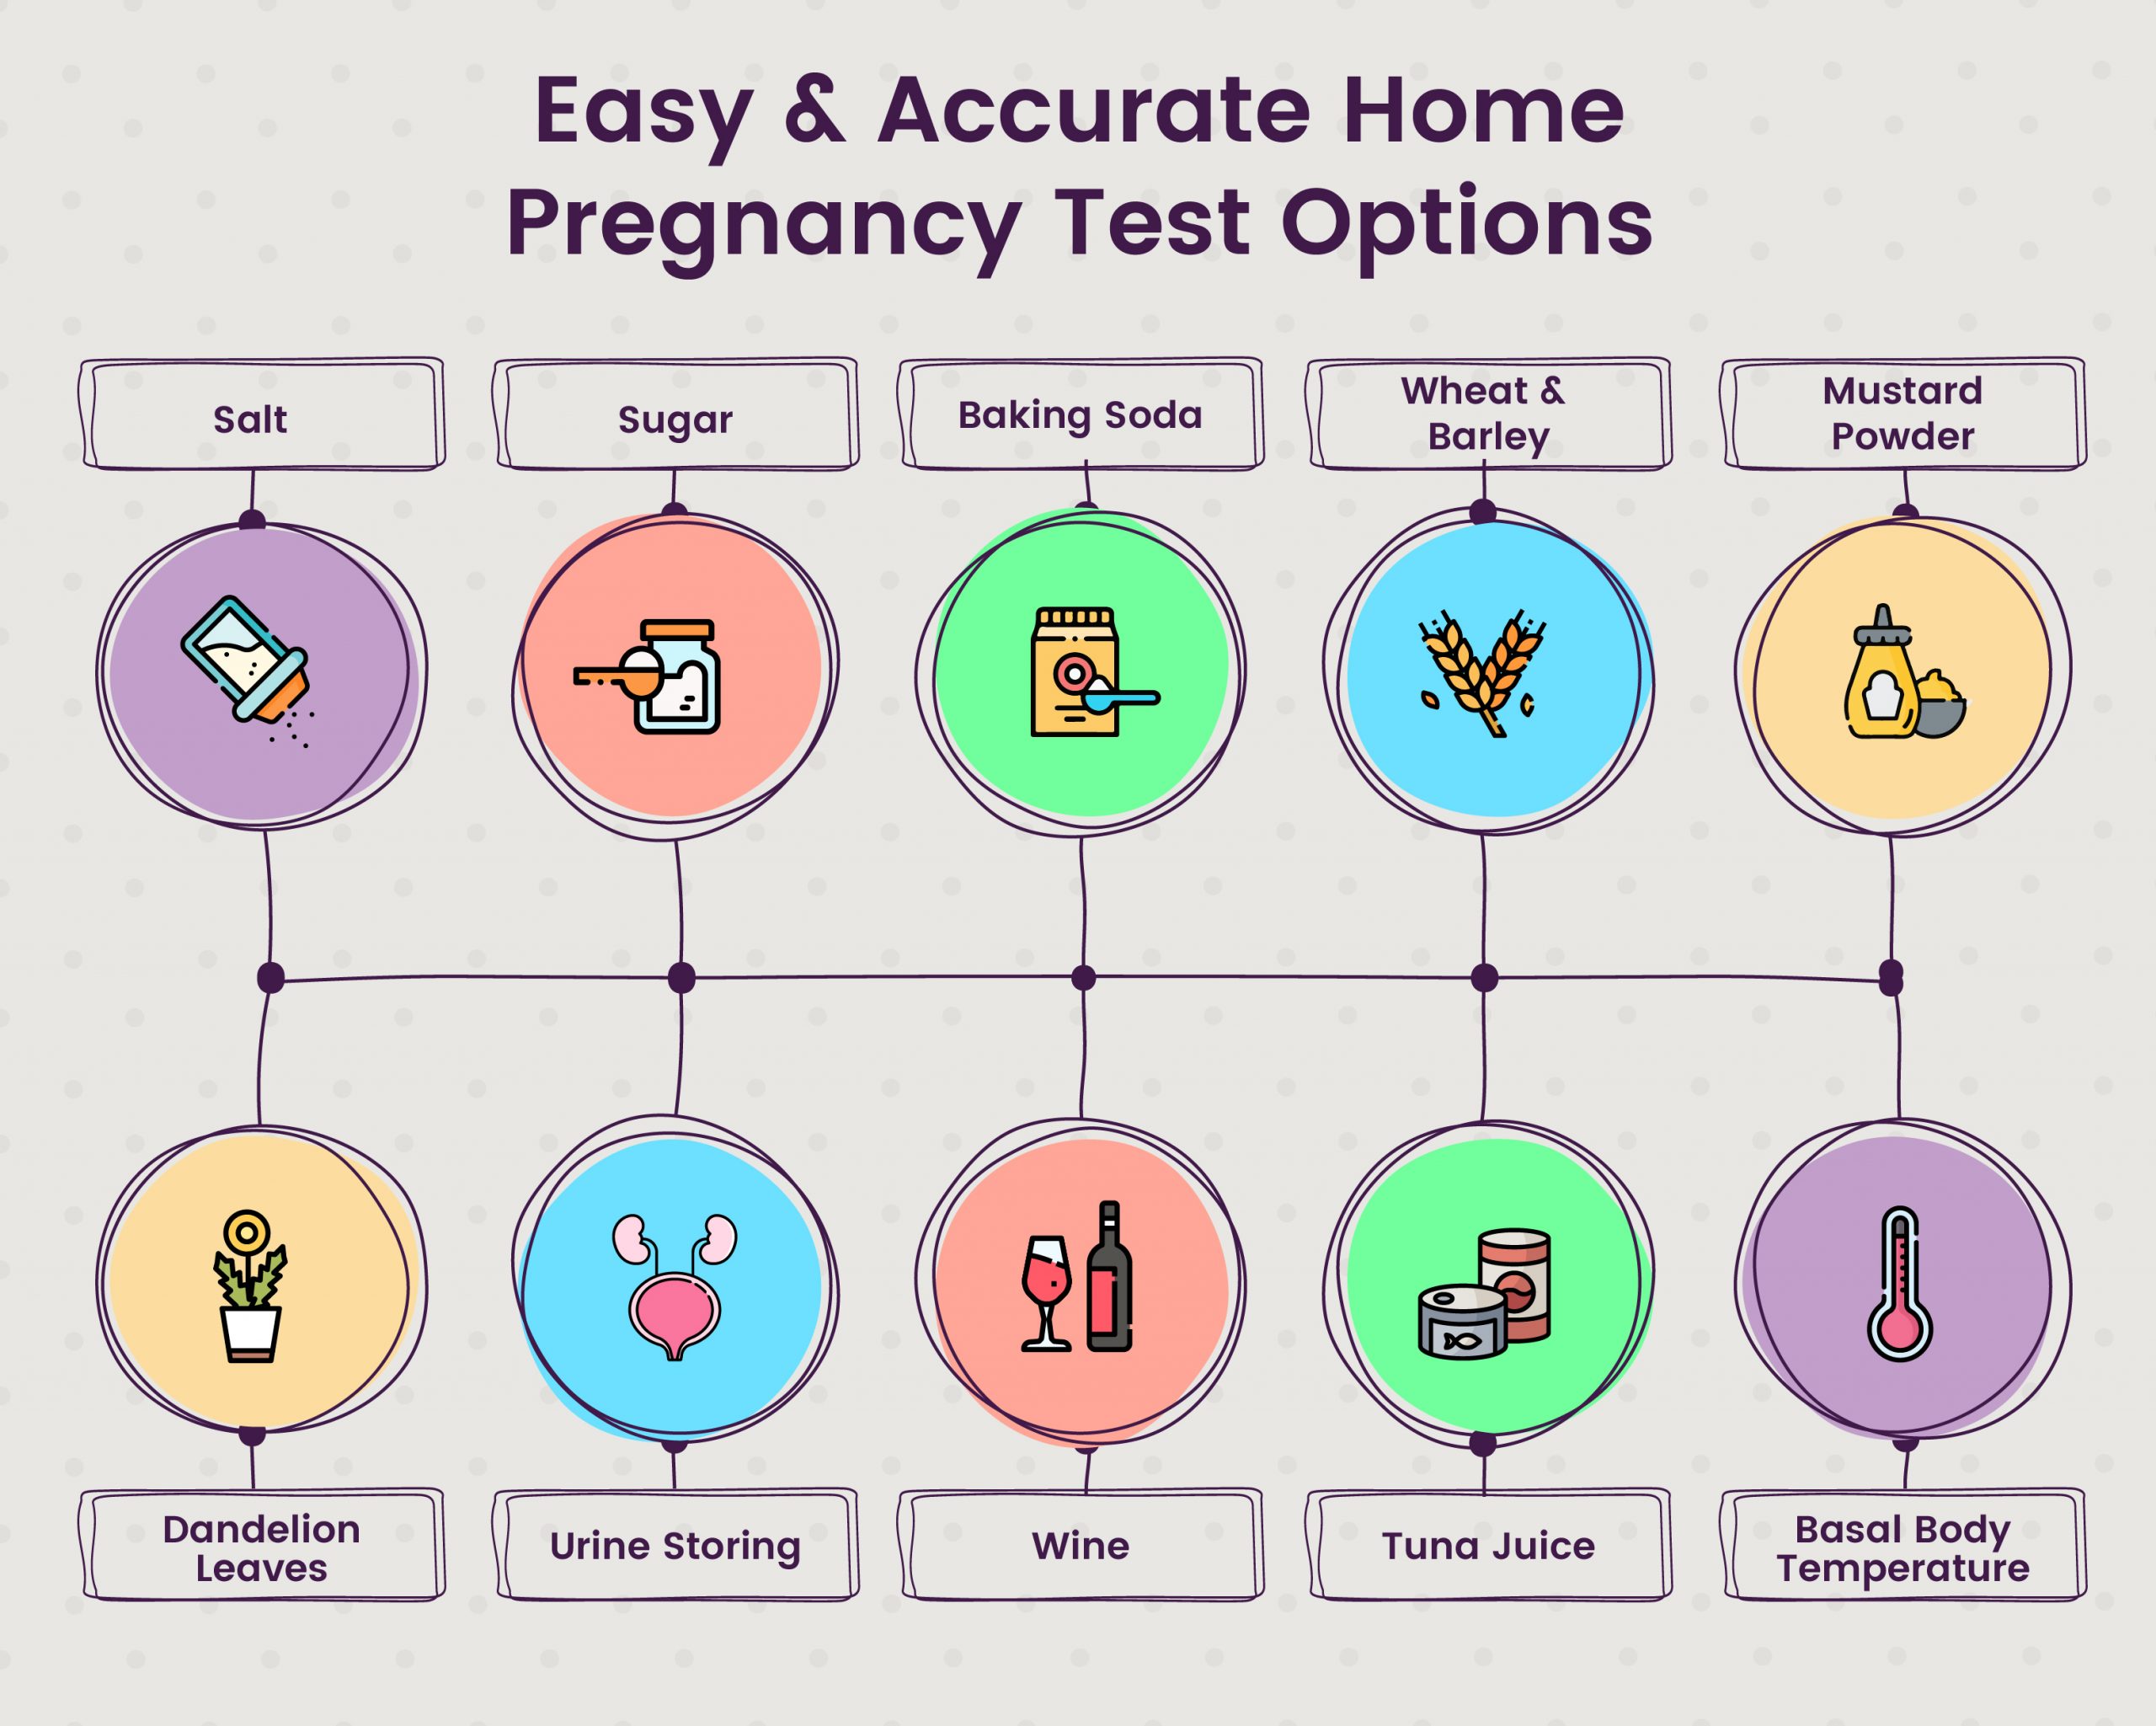 https://immunifyme.com/blog/wp-content/uploads/2020/11/Home-Pregnancy-Tests-01-scaled.jpg